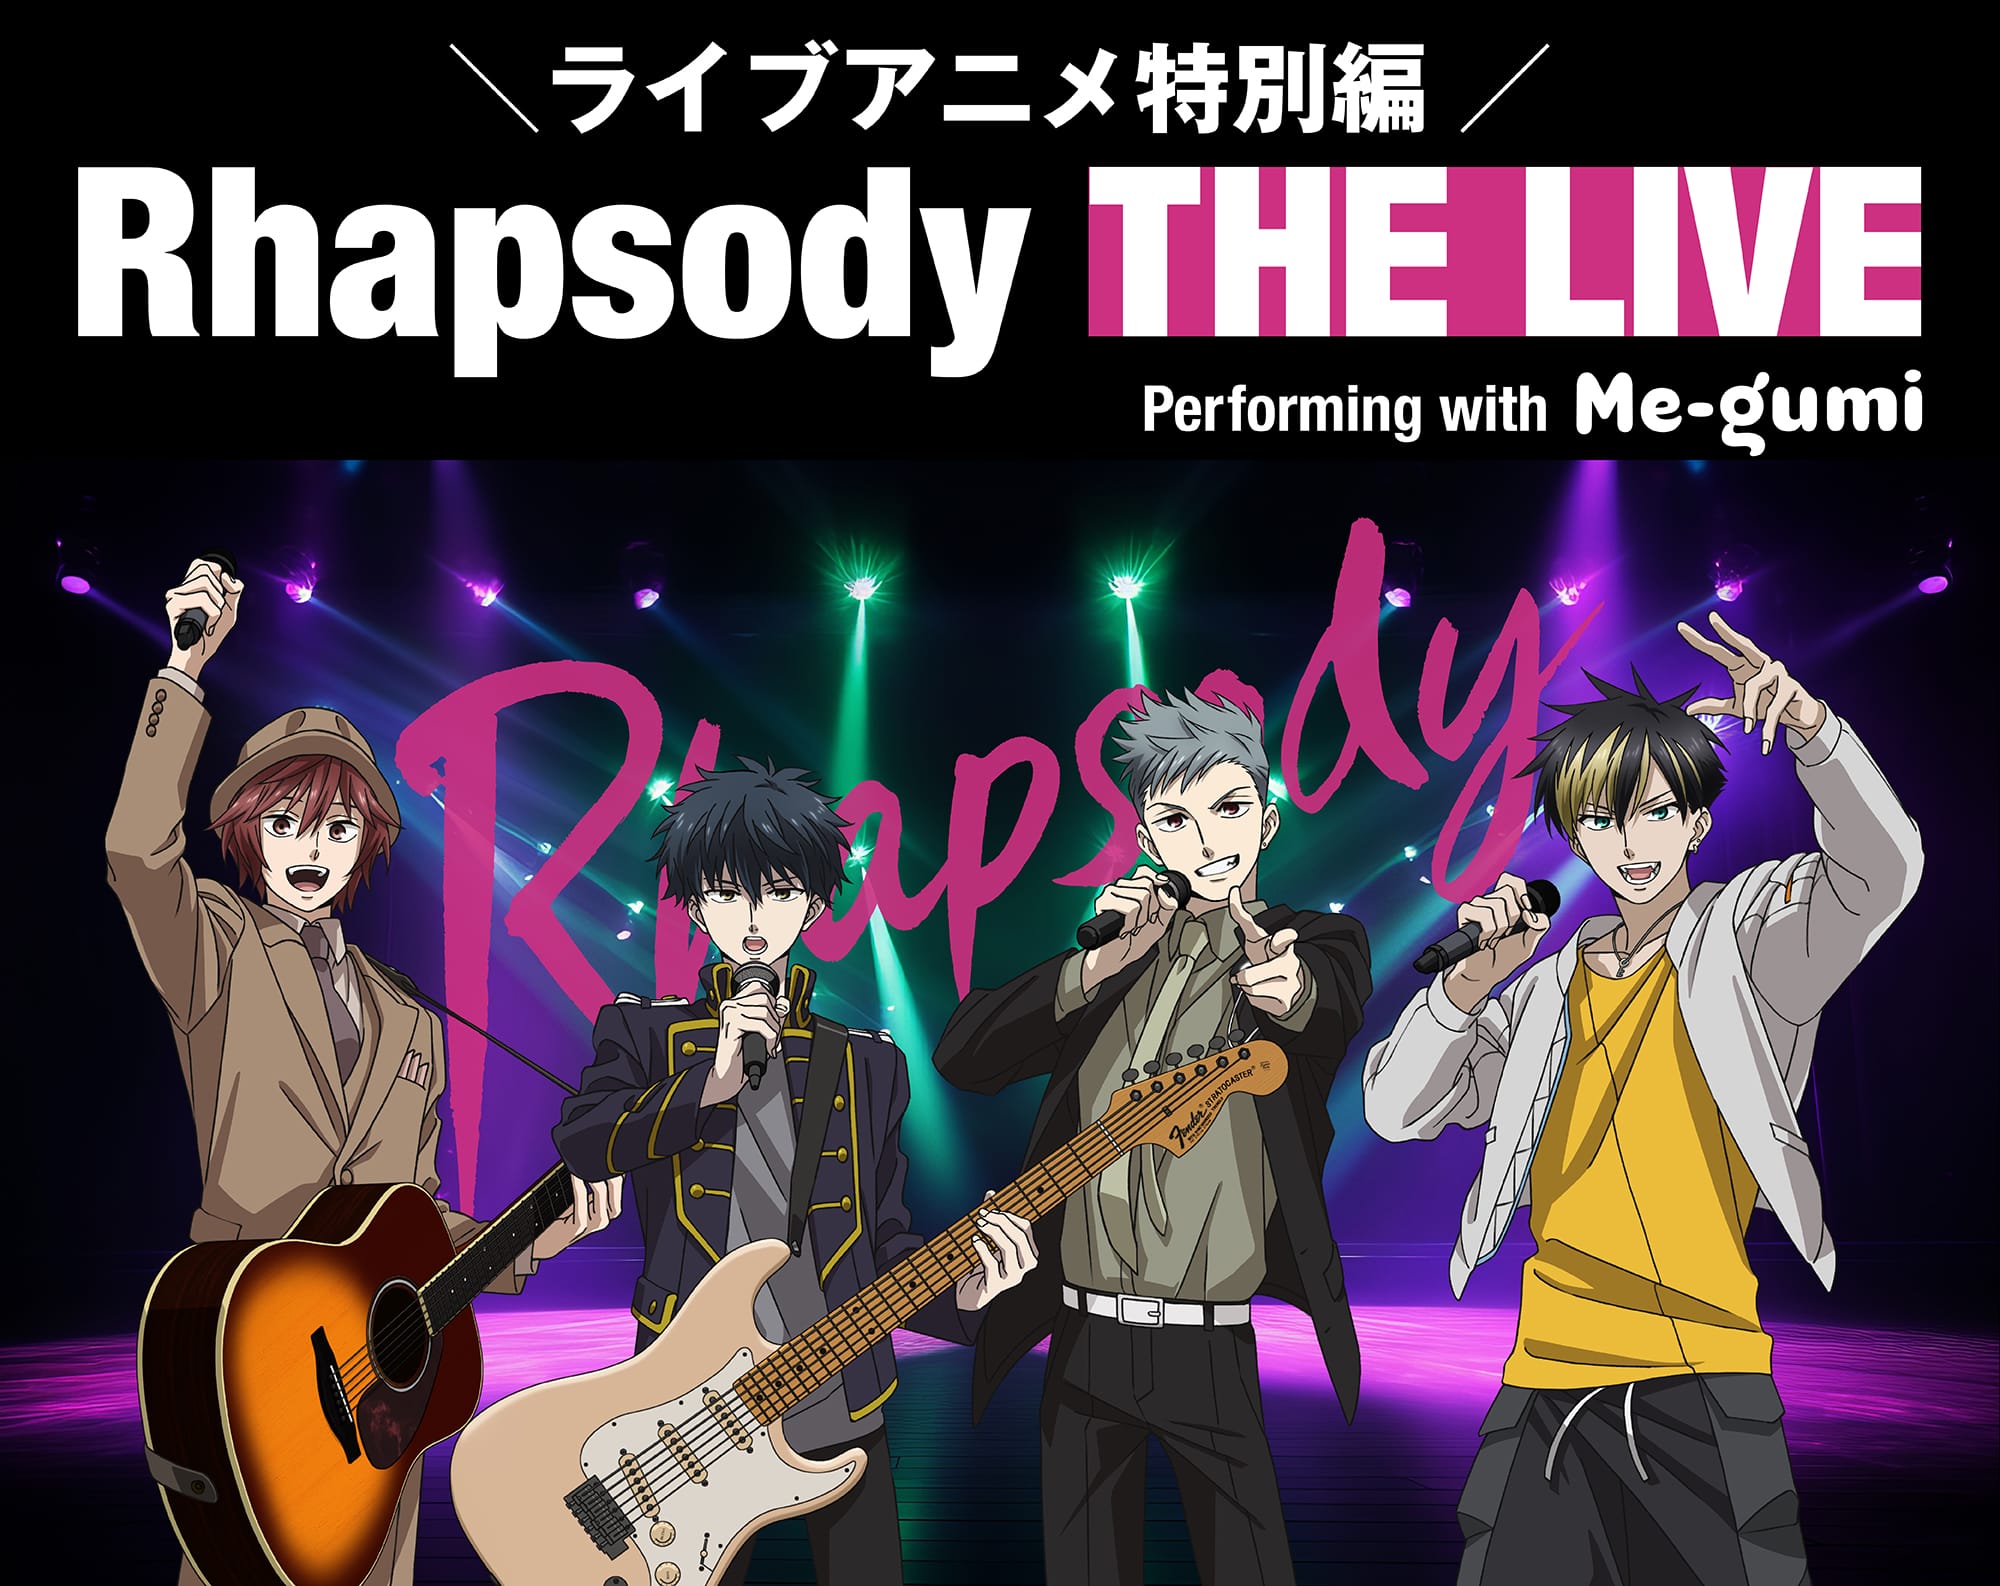 Rhapsody THE LIVE